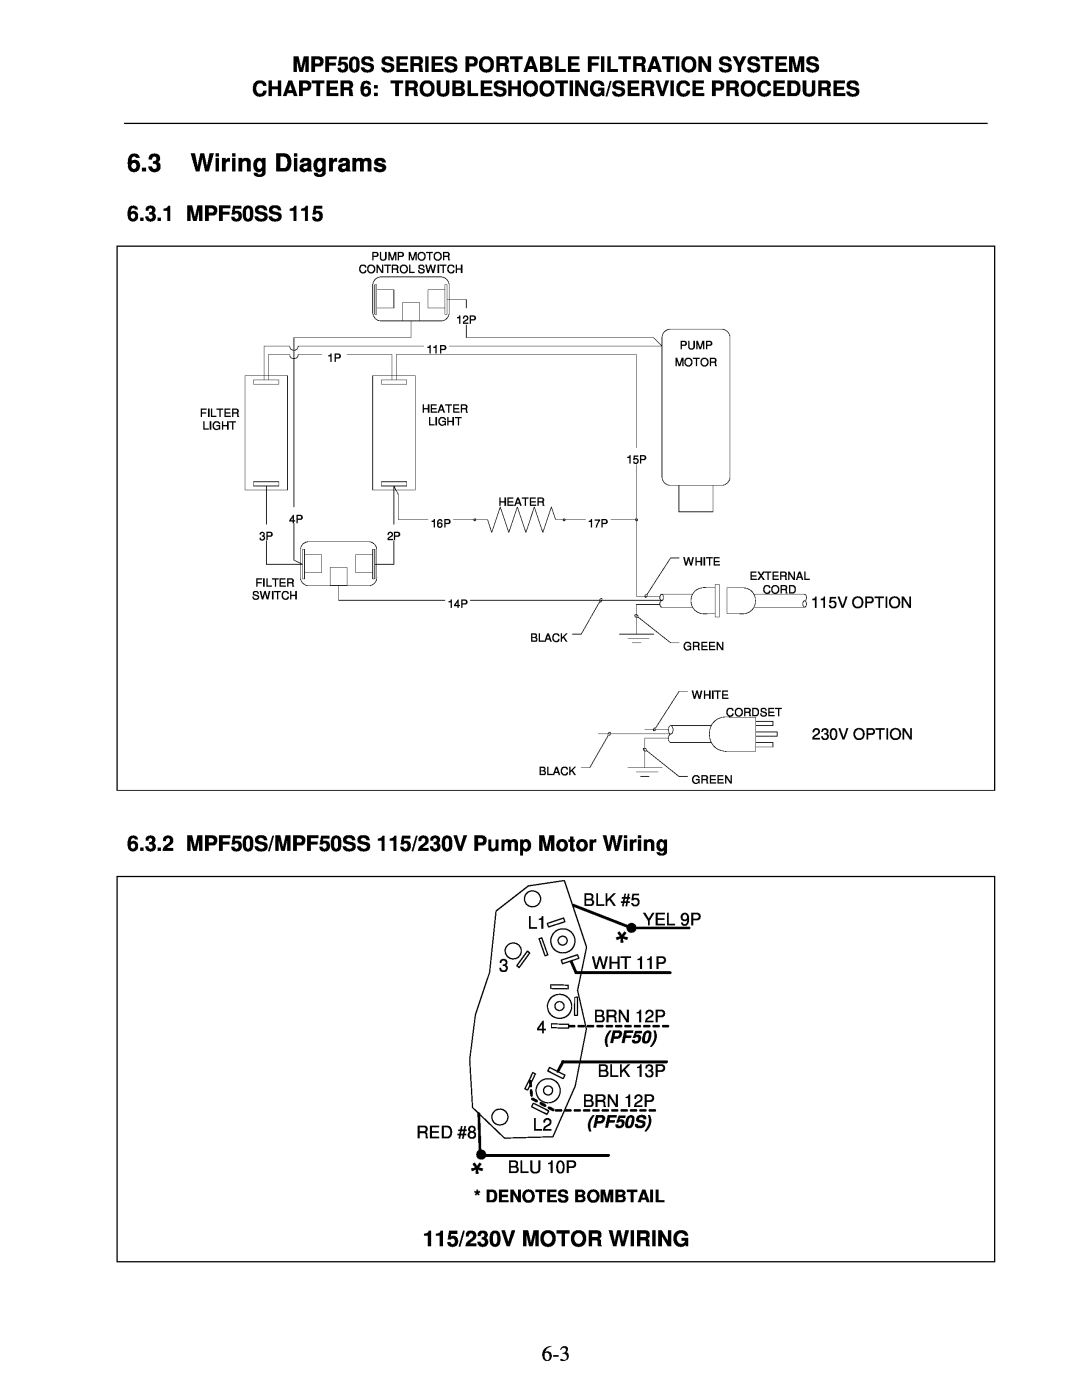 Frymaster MPF50S Series manual 6.3Wiring Diagrams, 6.3.1 MPF50SS, 6.3.2 MPF50S/MPF50SS 115/230V Pump Motor Wiring, L2 PF50S 